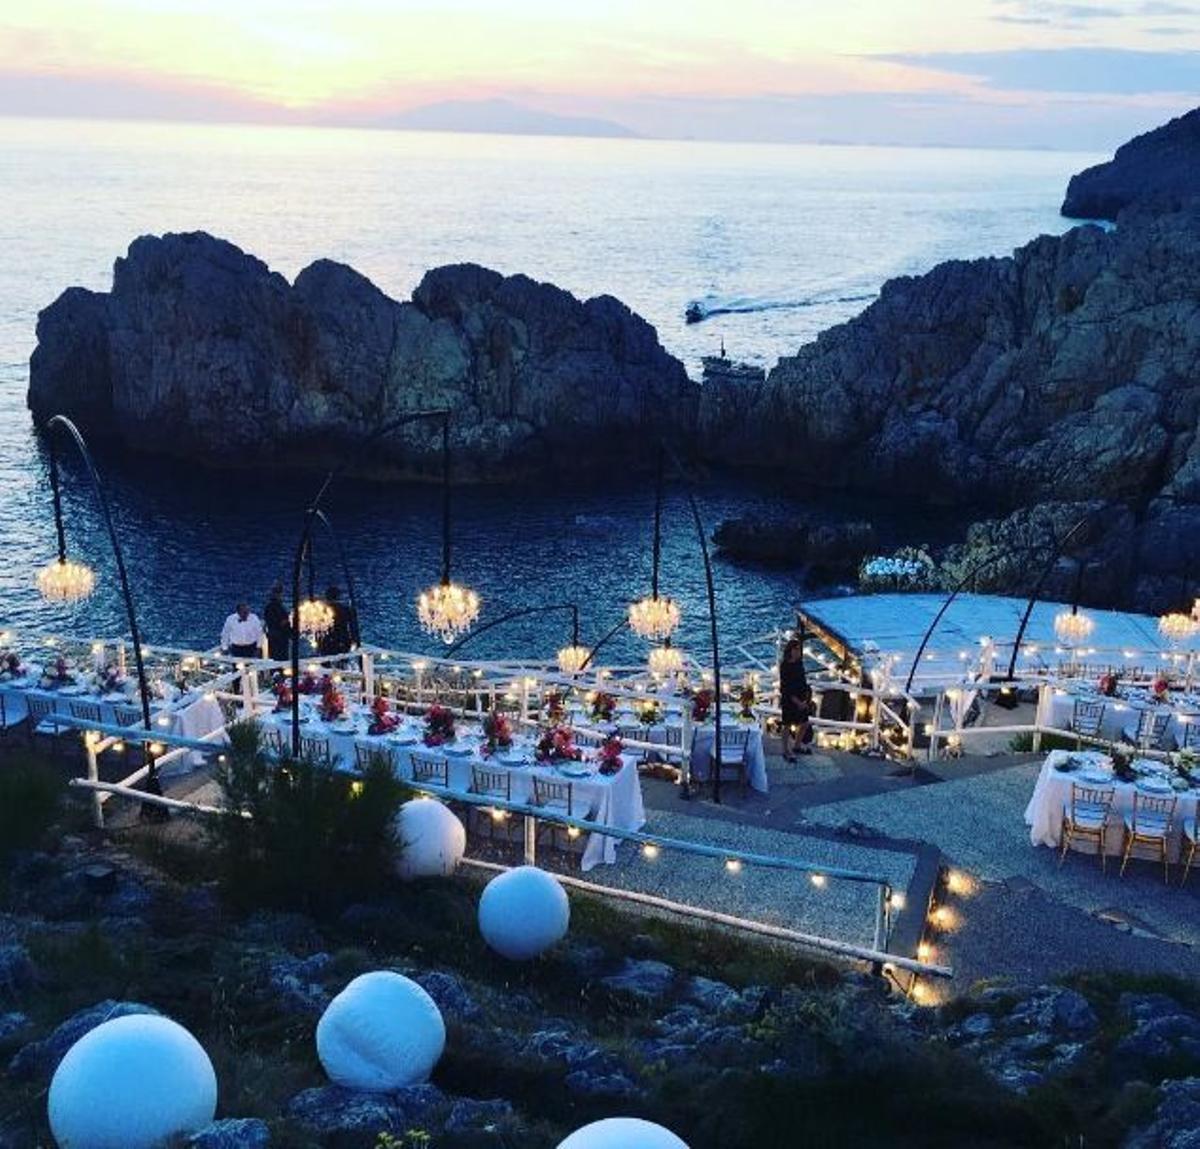 La boda de Giovanna Battaglia: detalles del enlace en Capri